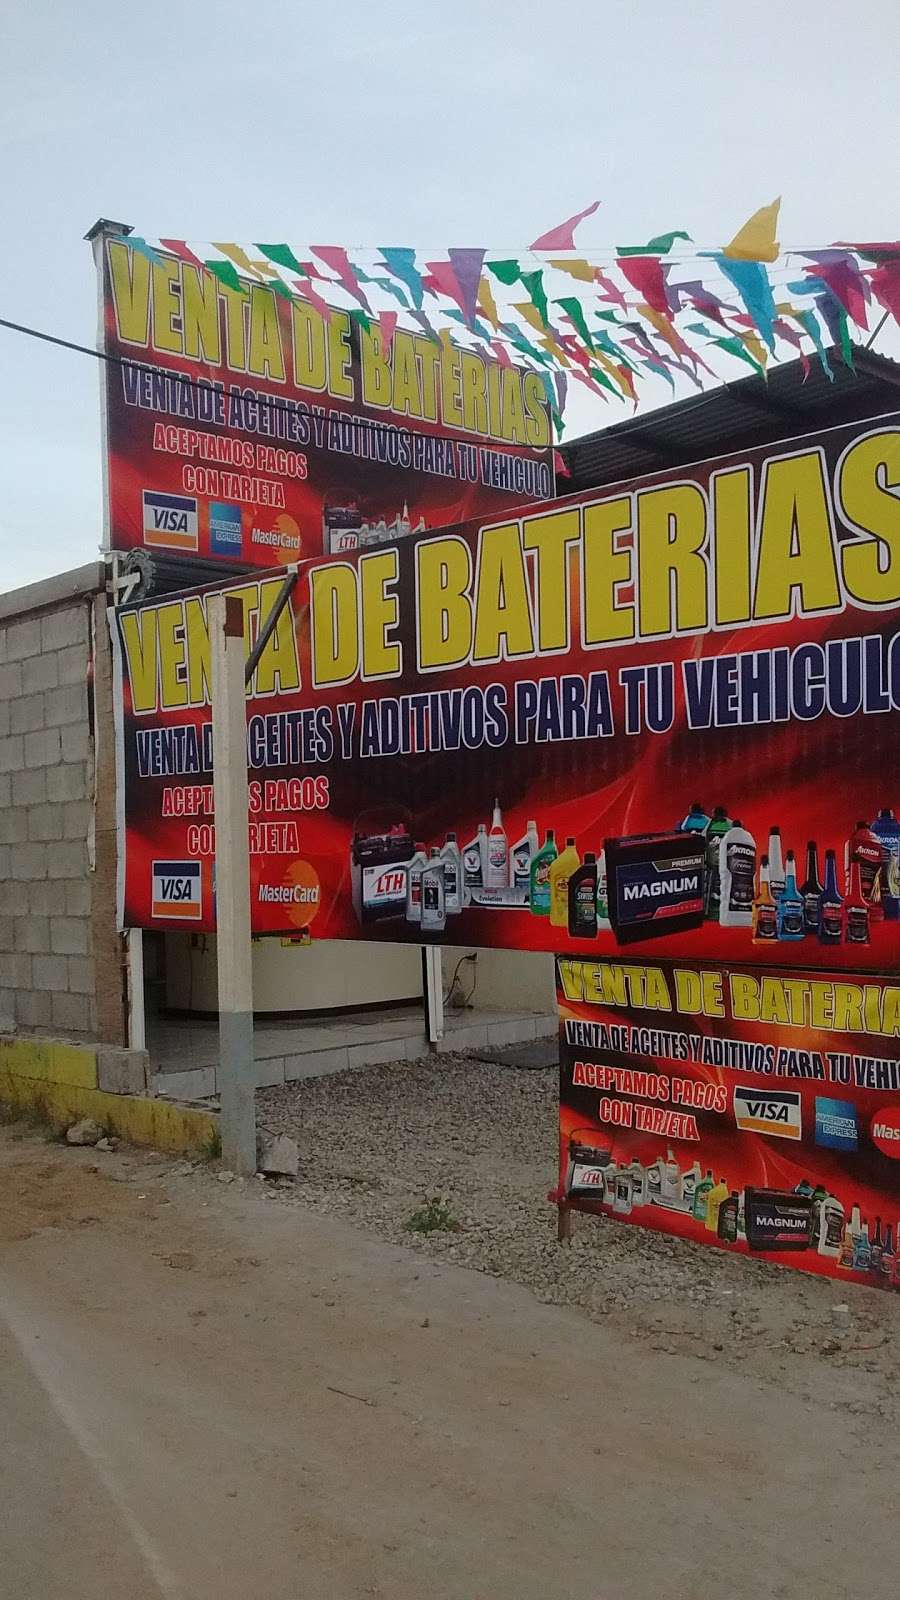 Baterias | 22225, Av de los Insurgentes 5485, La Campiña, 22225 Tijuana, B.C., Mexico